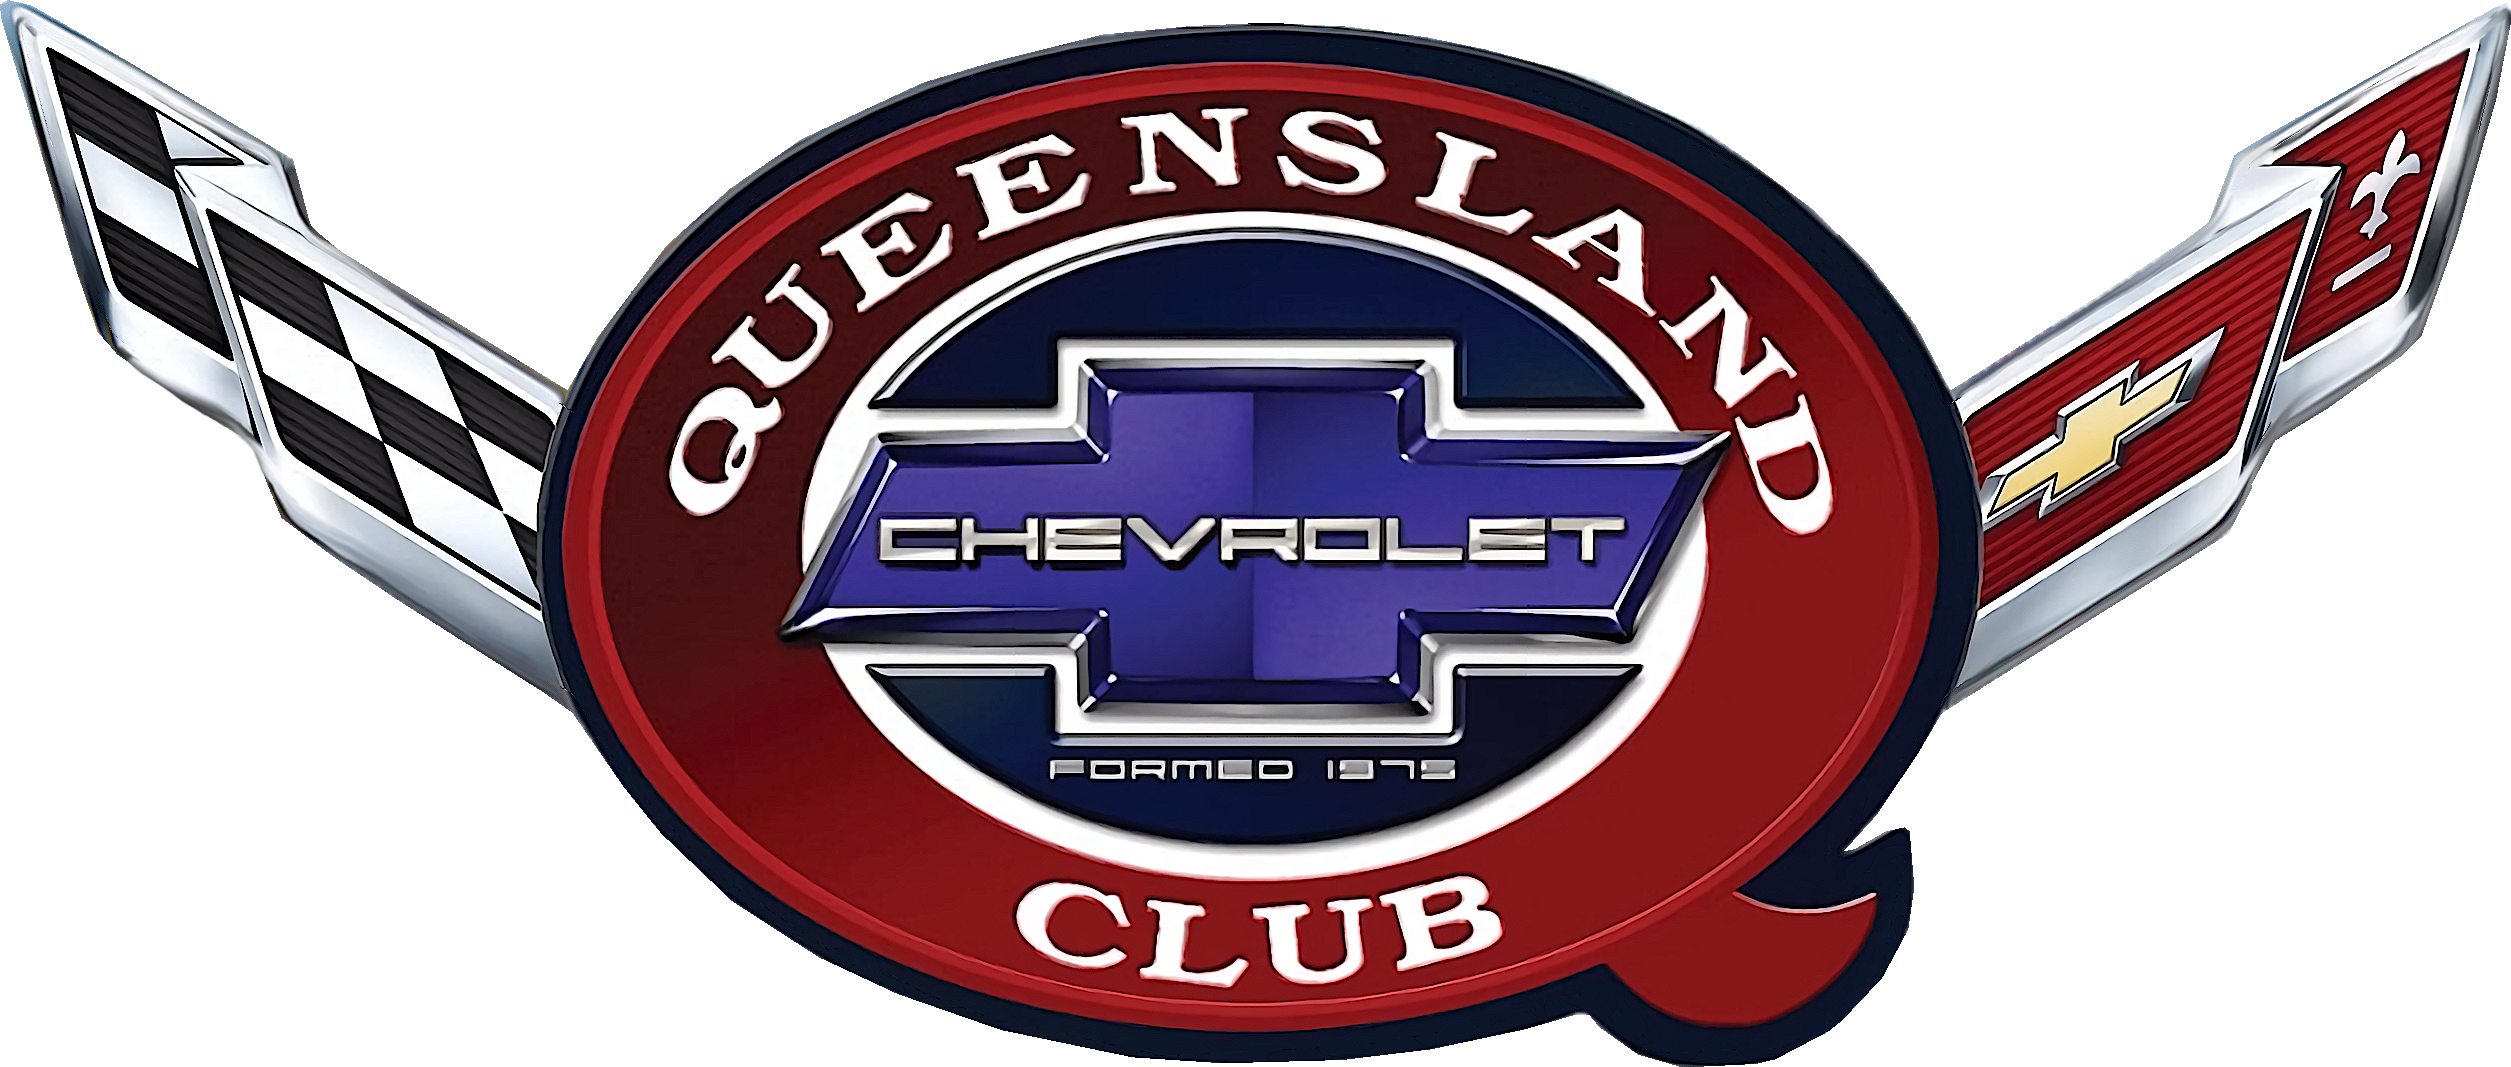 Queensland Chevrolet Car Club Inc.